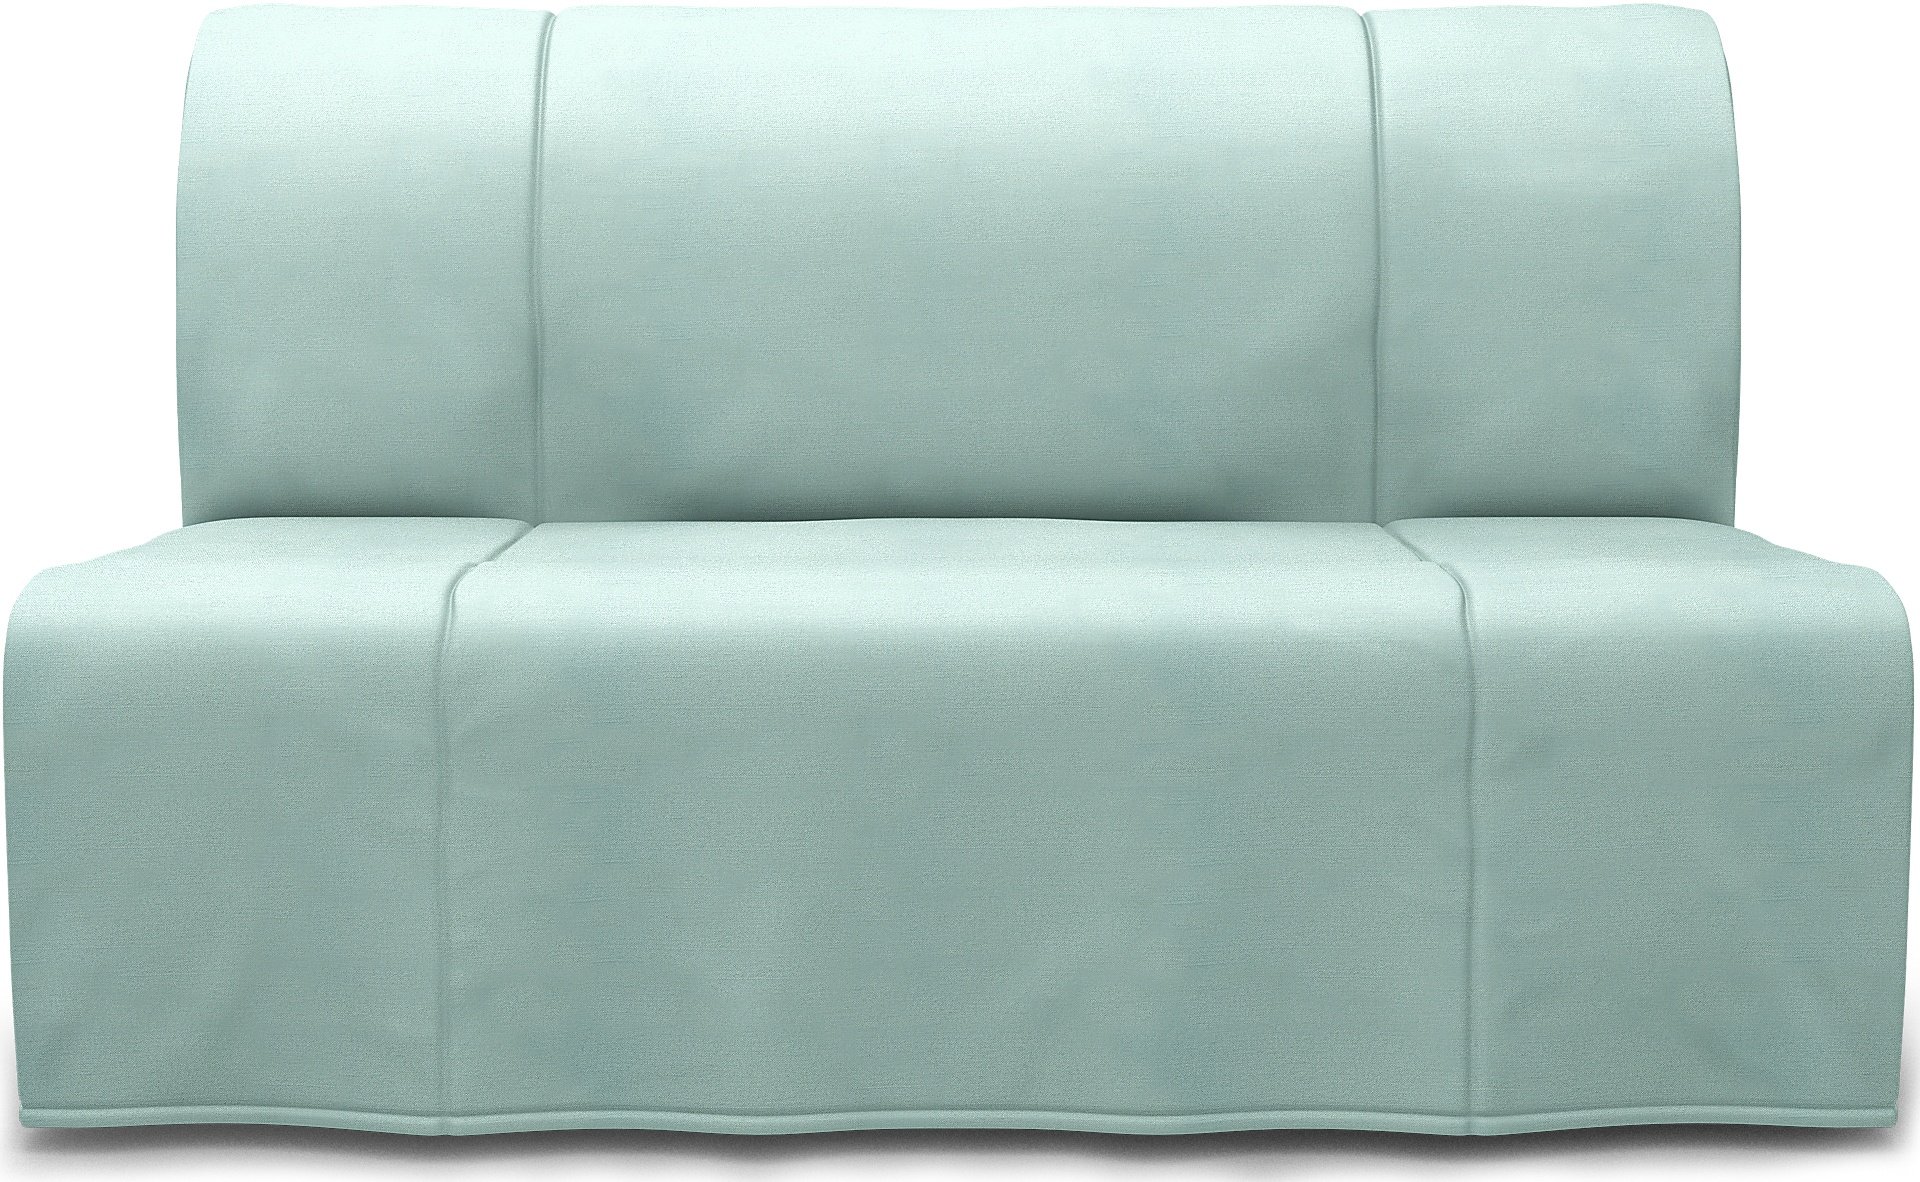 IKEA - Lycksele 2 Seater Bedsofa, Mineral Blue, Linen - Bemz